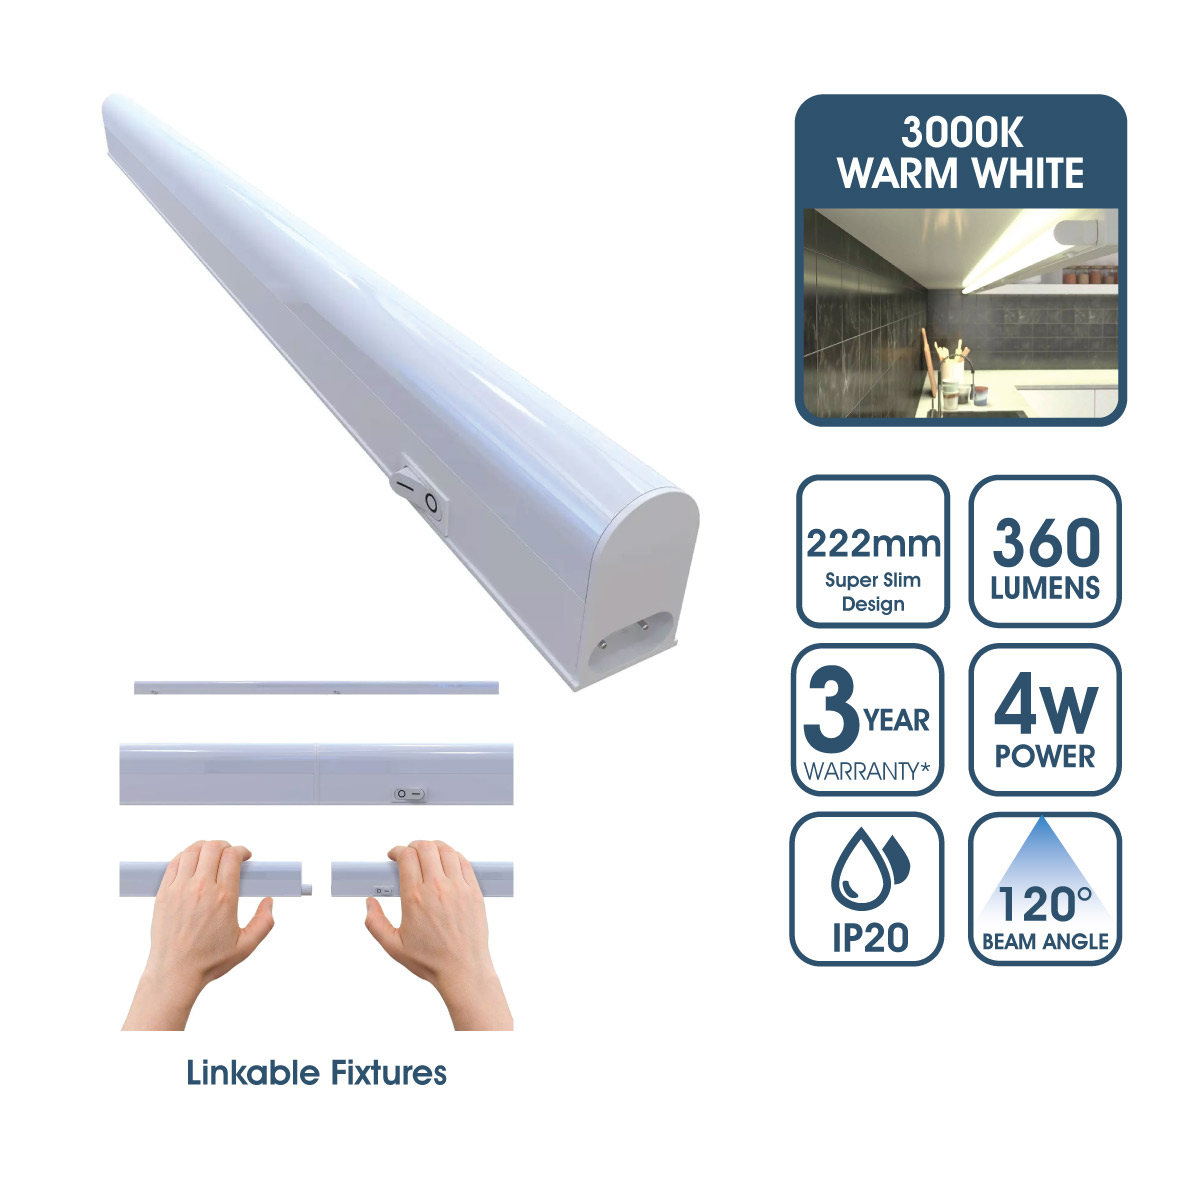 View 222mm Linkable LED Ultraslim Under Cabinet Light Fitting Warm White information